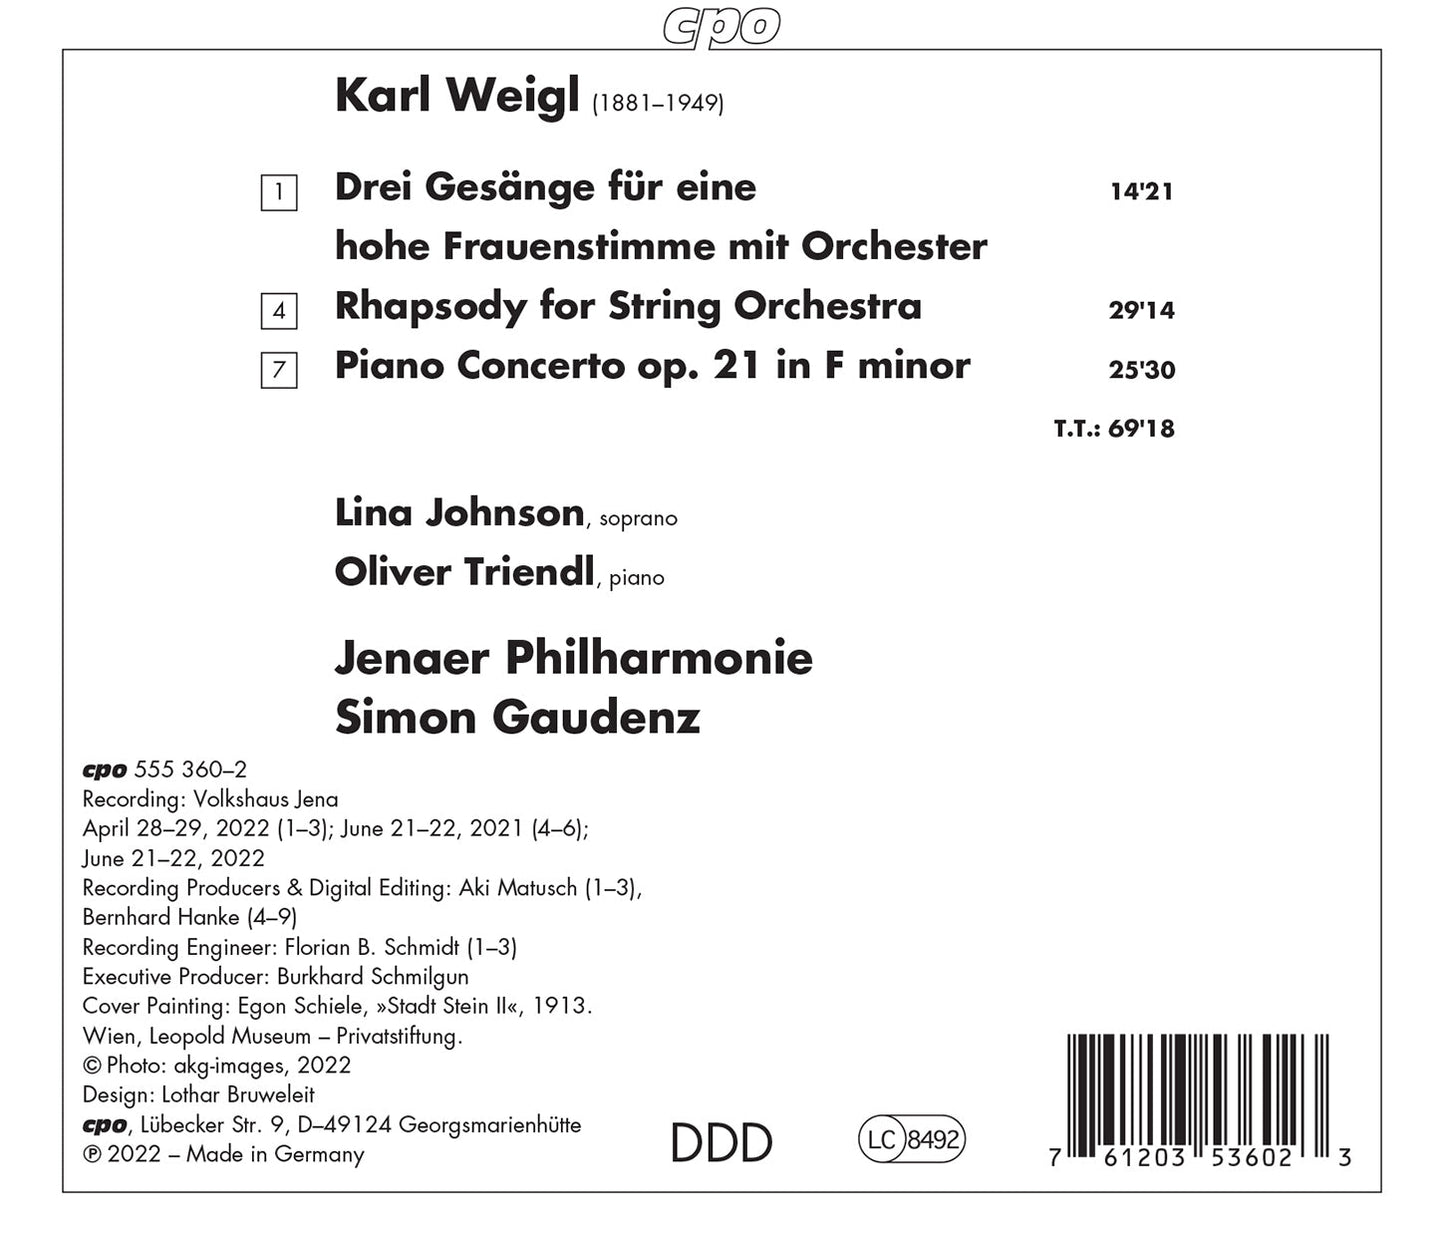 Weigl: Rhapsody; Piano Concerto; Songs